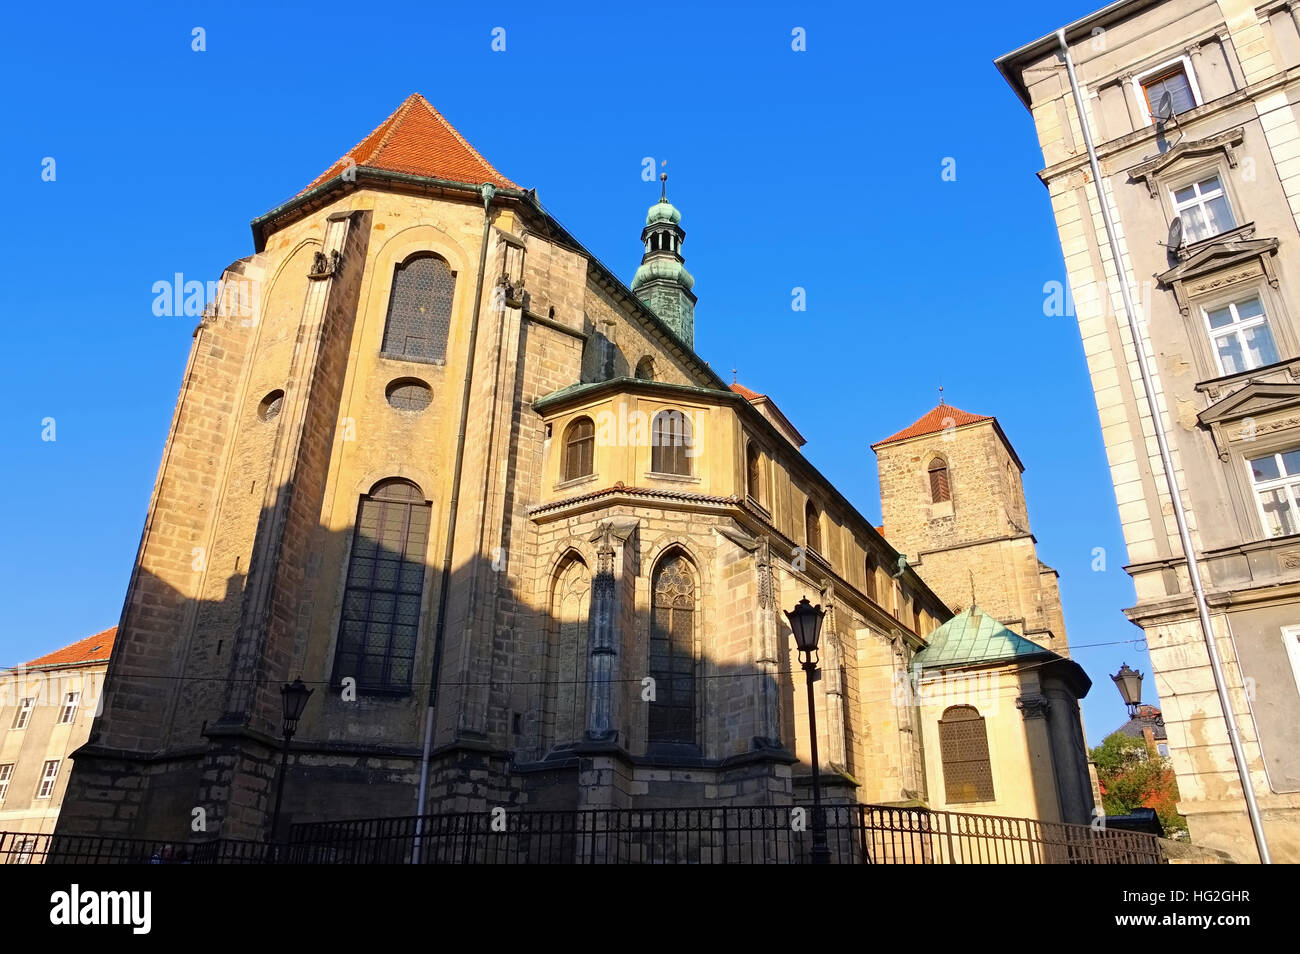 Glatz Maria Himmelfahrt Kirche - church Assumption of Mary in Klodzko Glatz in Silesia, Poland Stock Photo